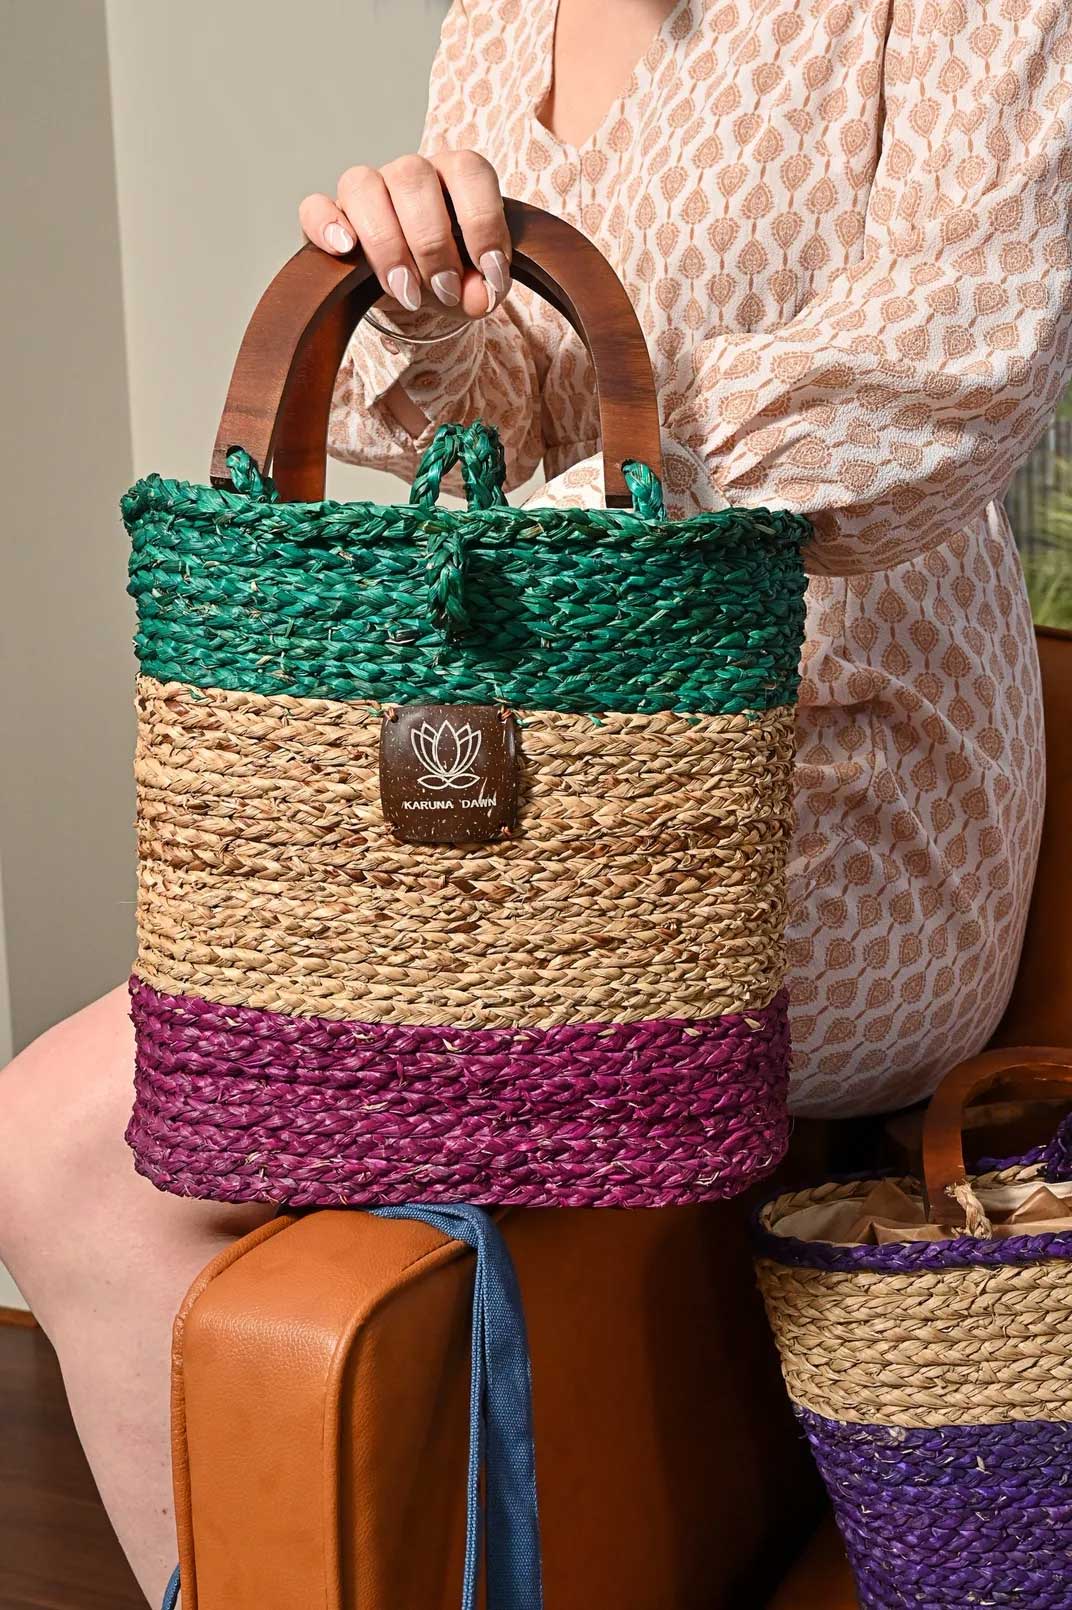 Wooden Handle Bag - Sea Green Turquoise, Natural & Pink-Karuna Dawn-stride